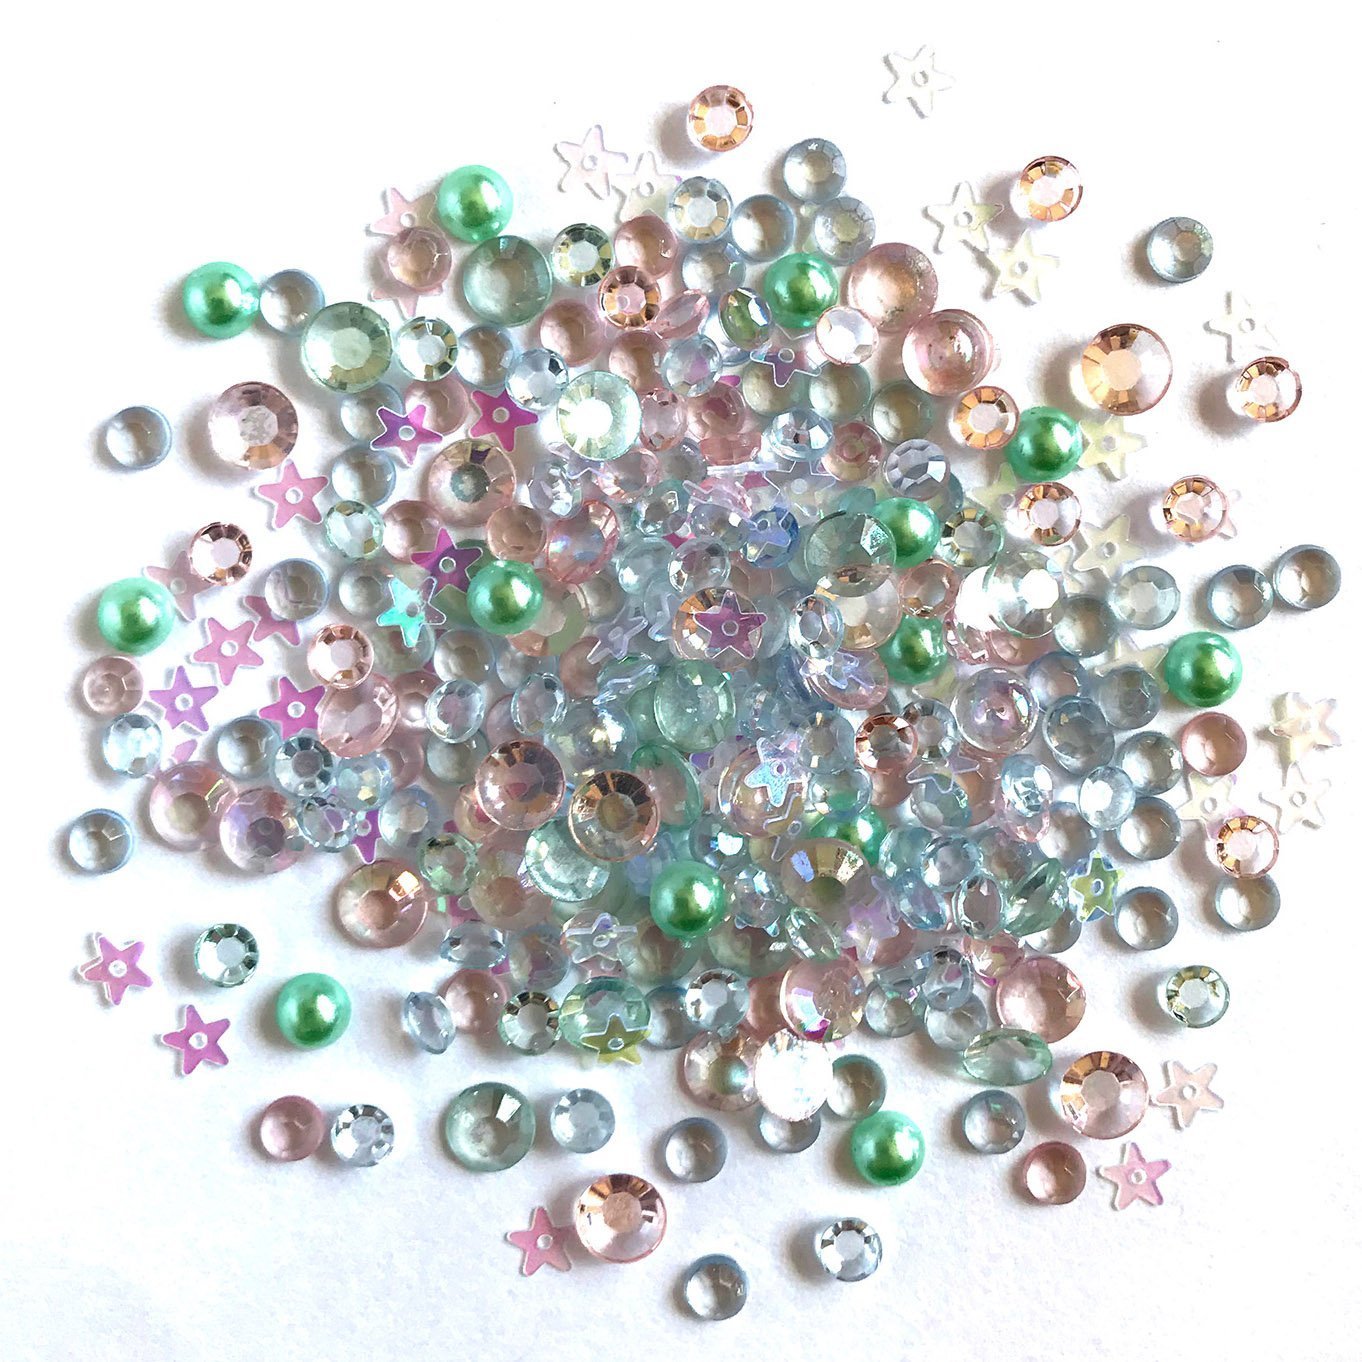 Buttons Galore Embellishments Iridescent Acrylic Gems, Shaped